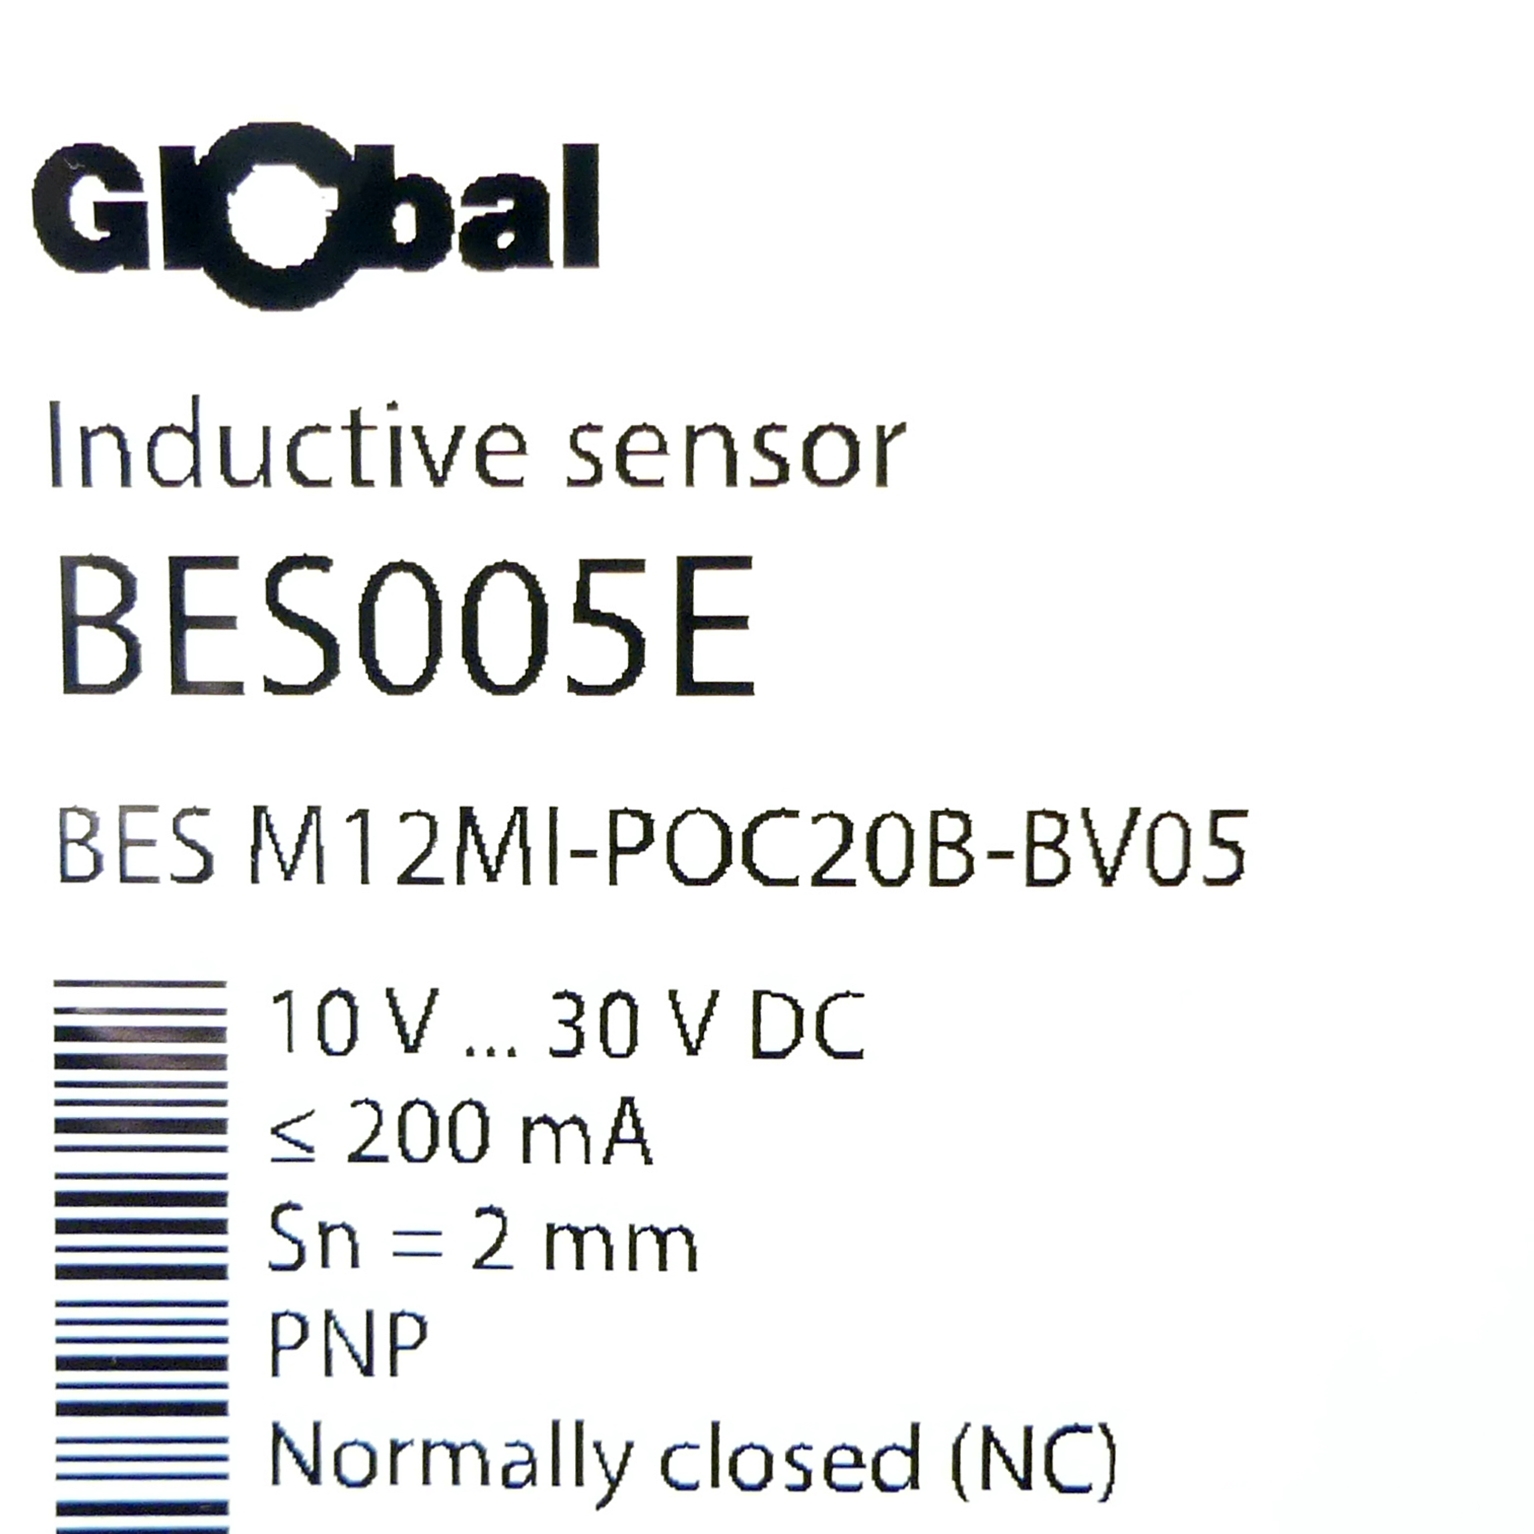 Inductive sensor BES005E 